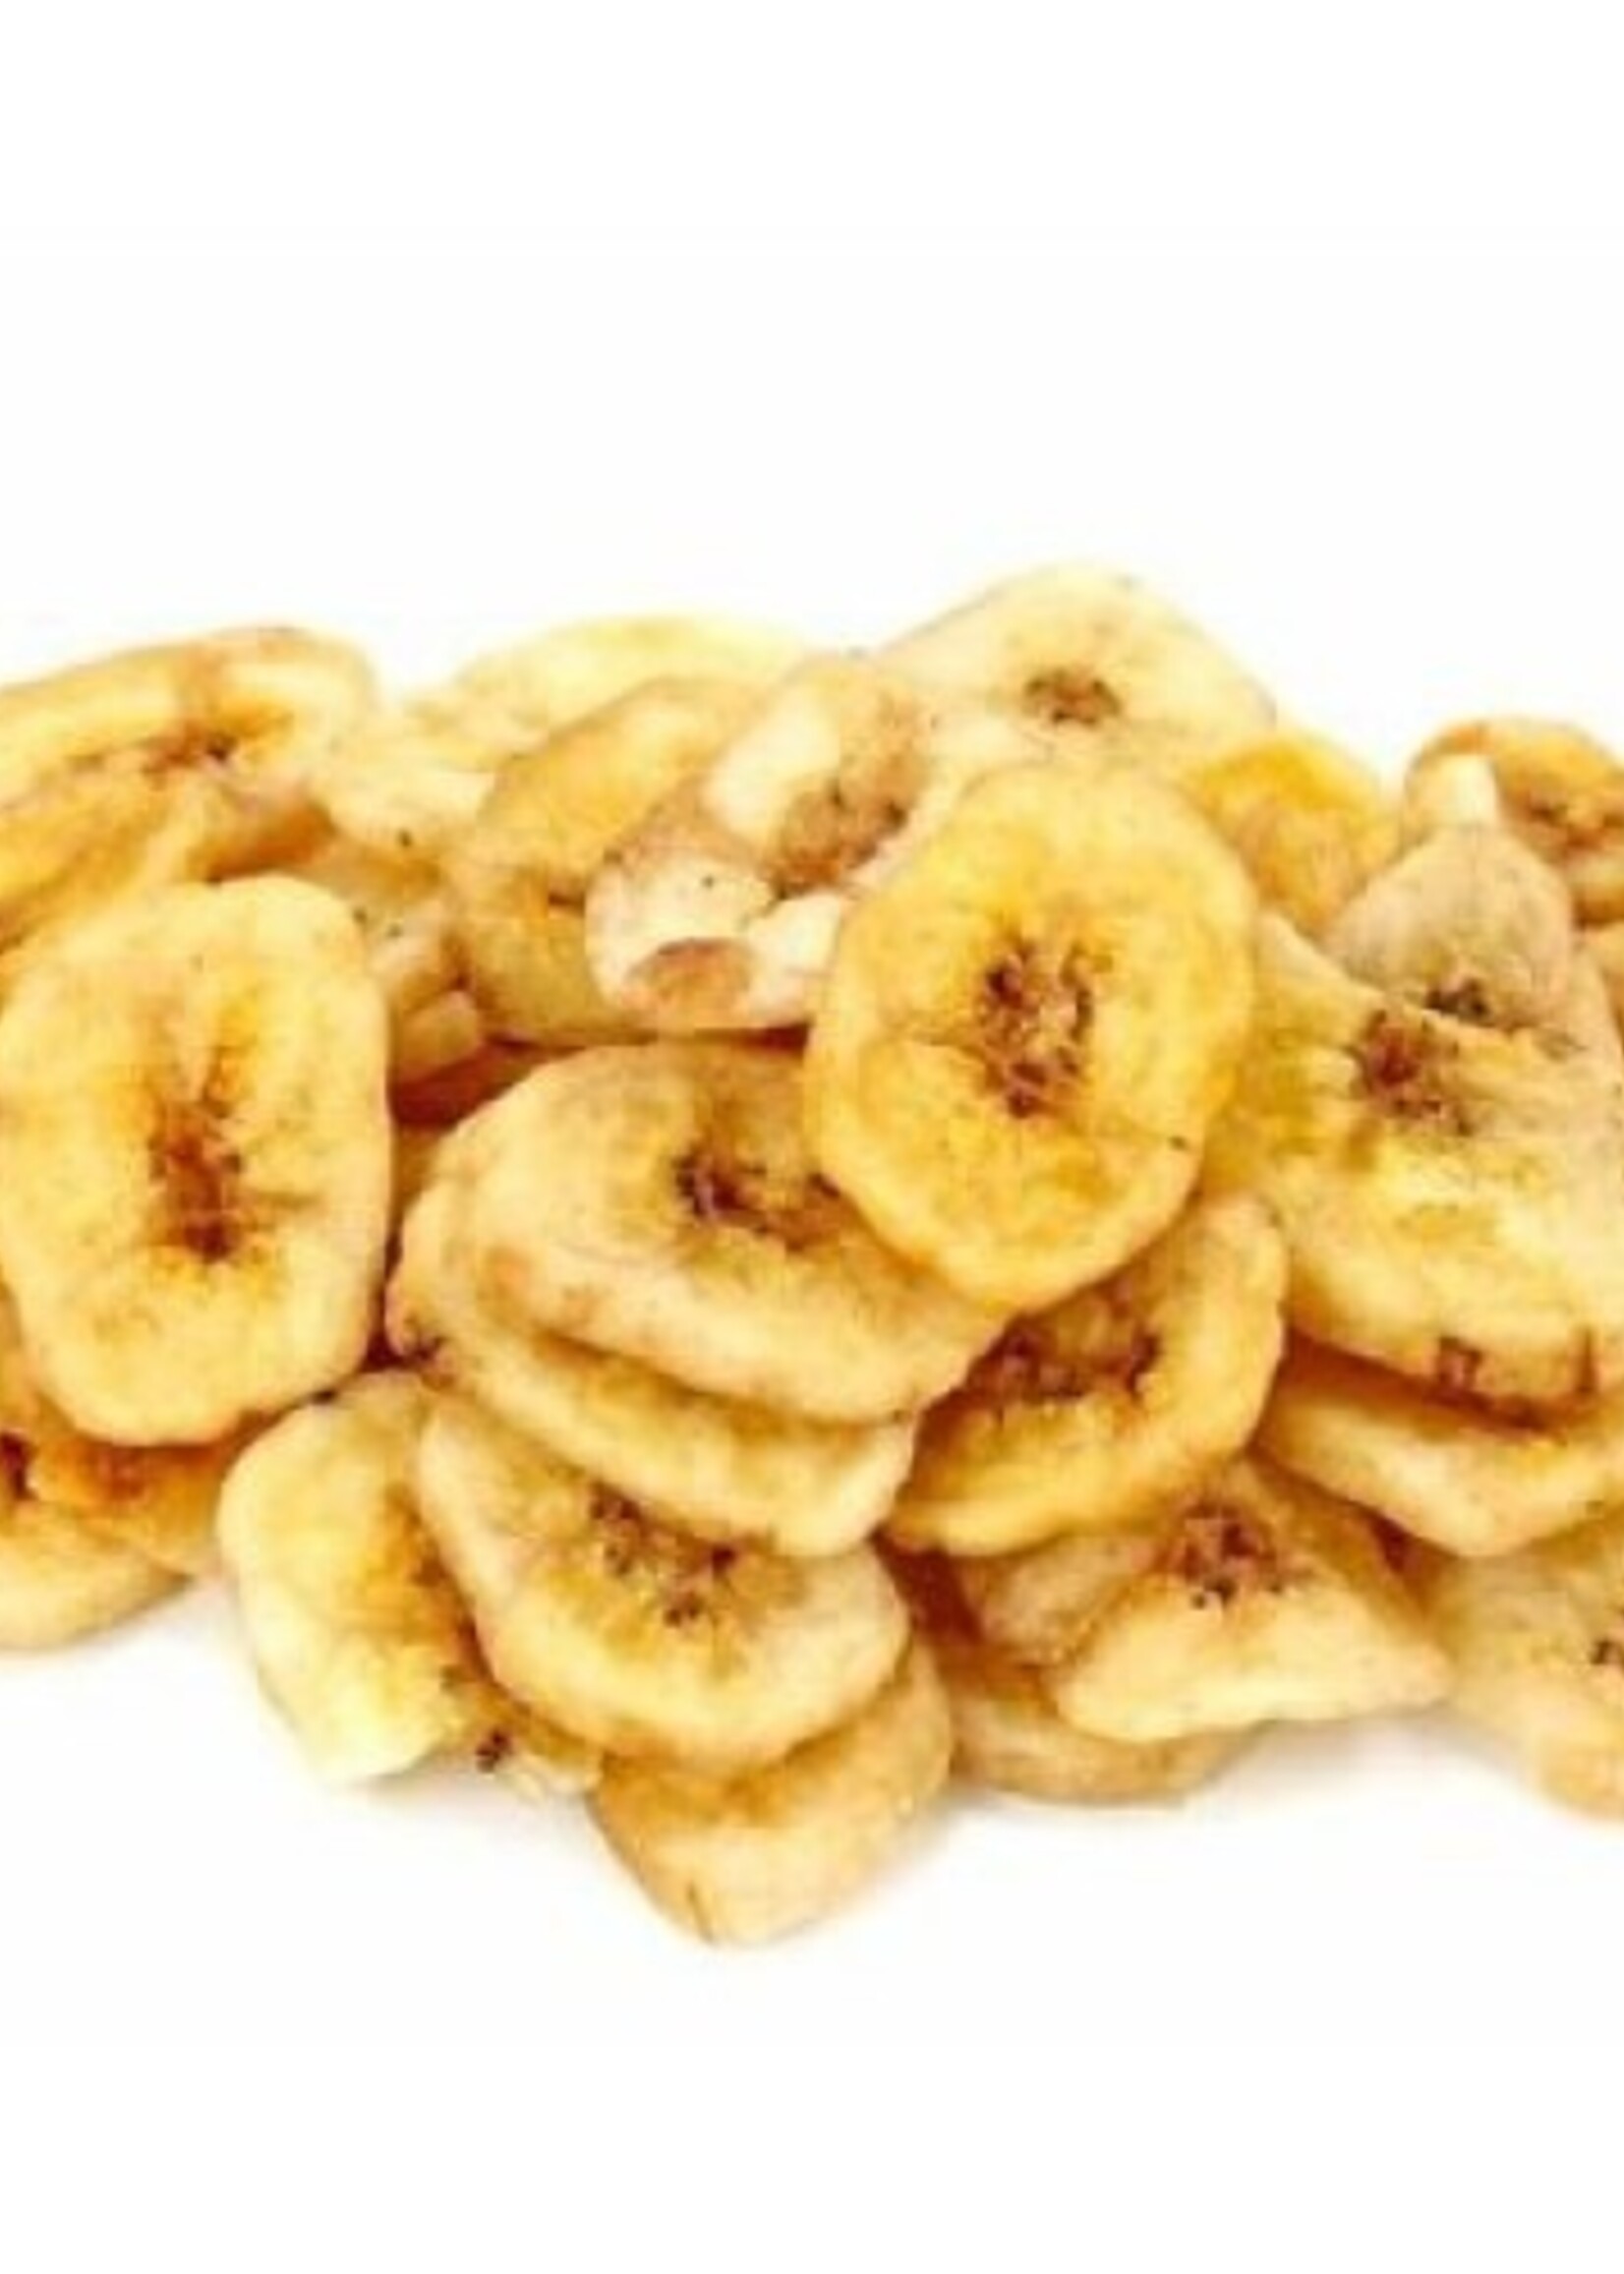 Avicentric Bananen Chips 250 gram